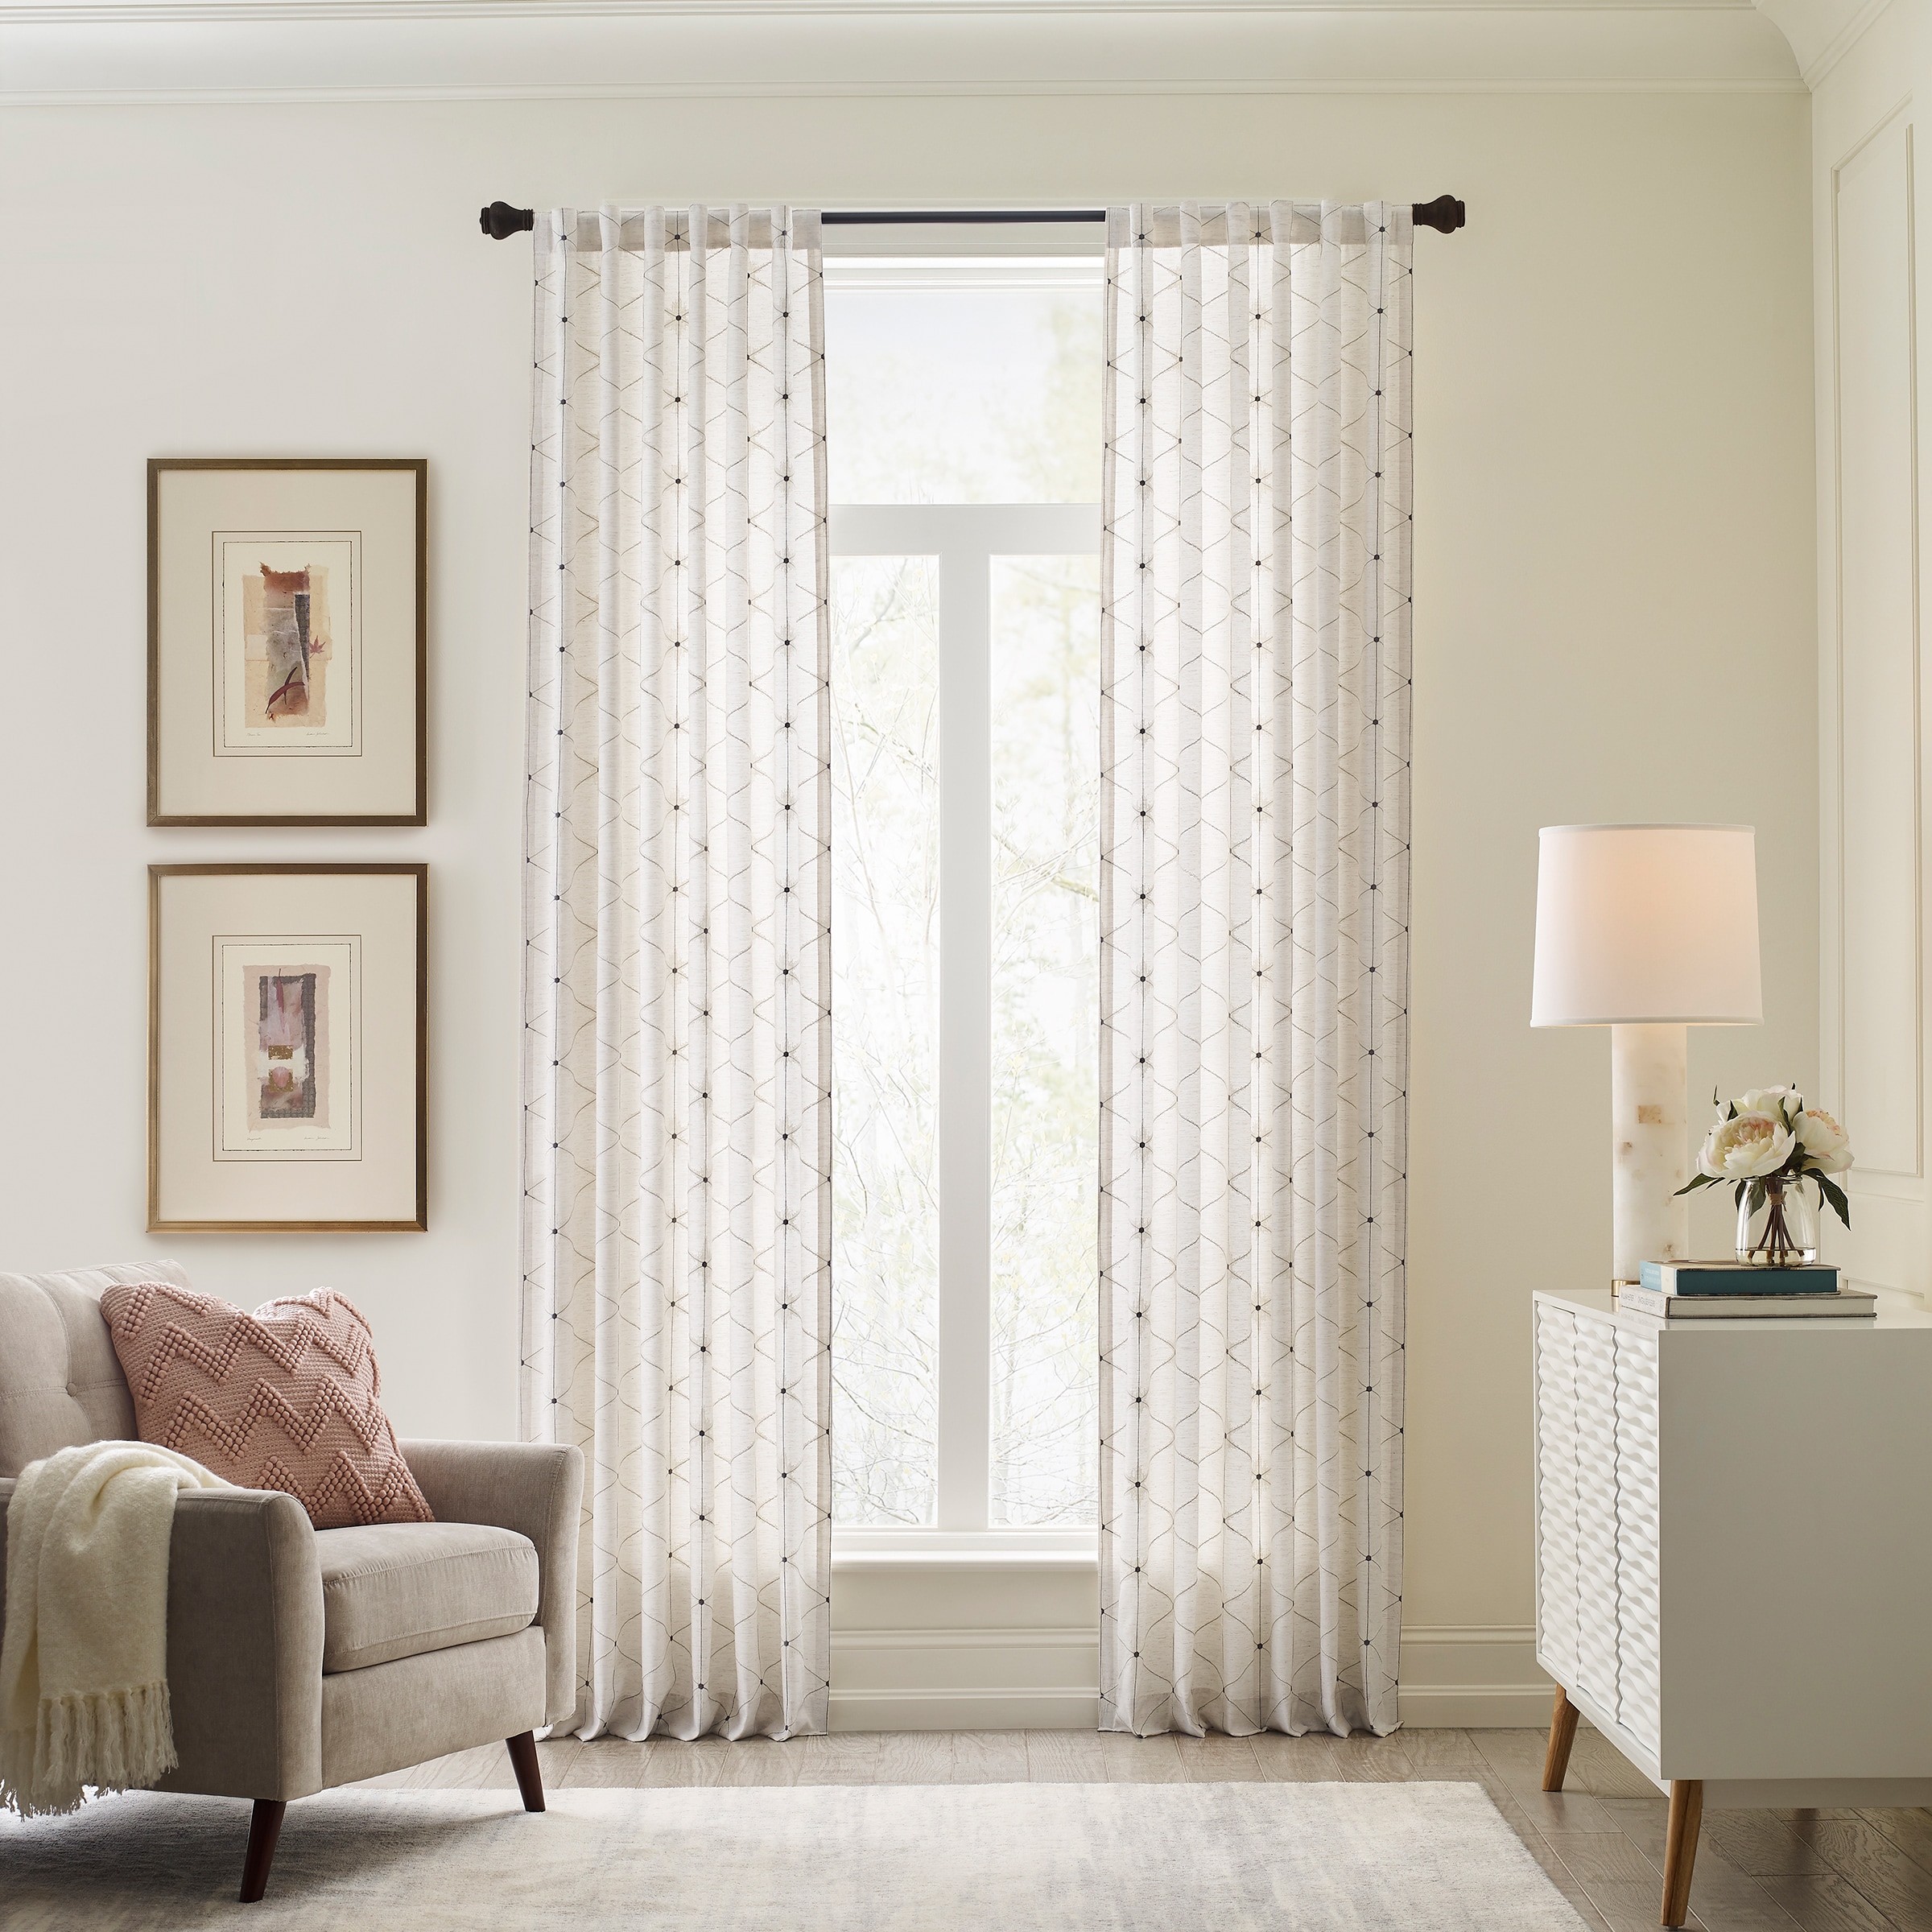 Classic Rainbo Window Awnings - Sunbrella Fabric Classic Style